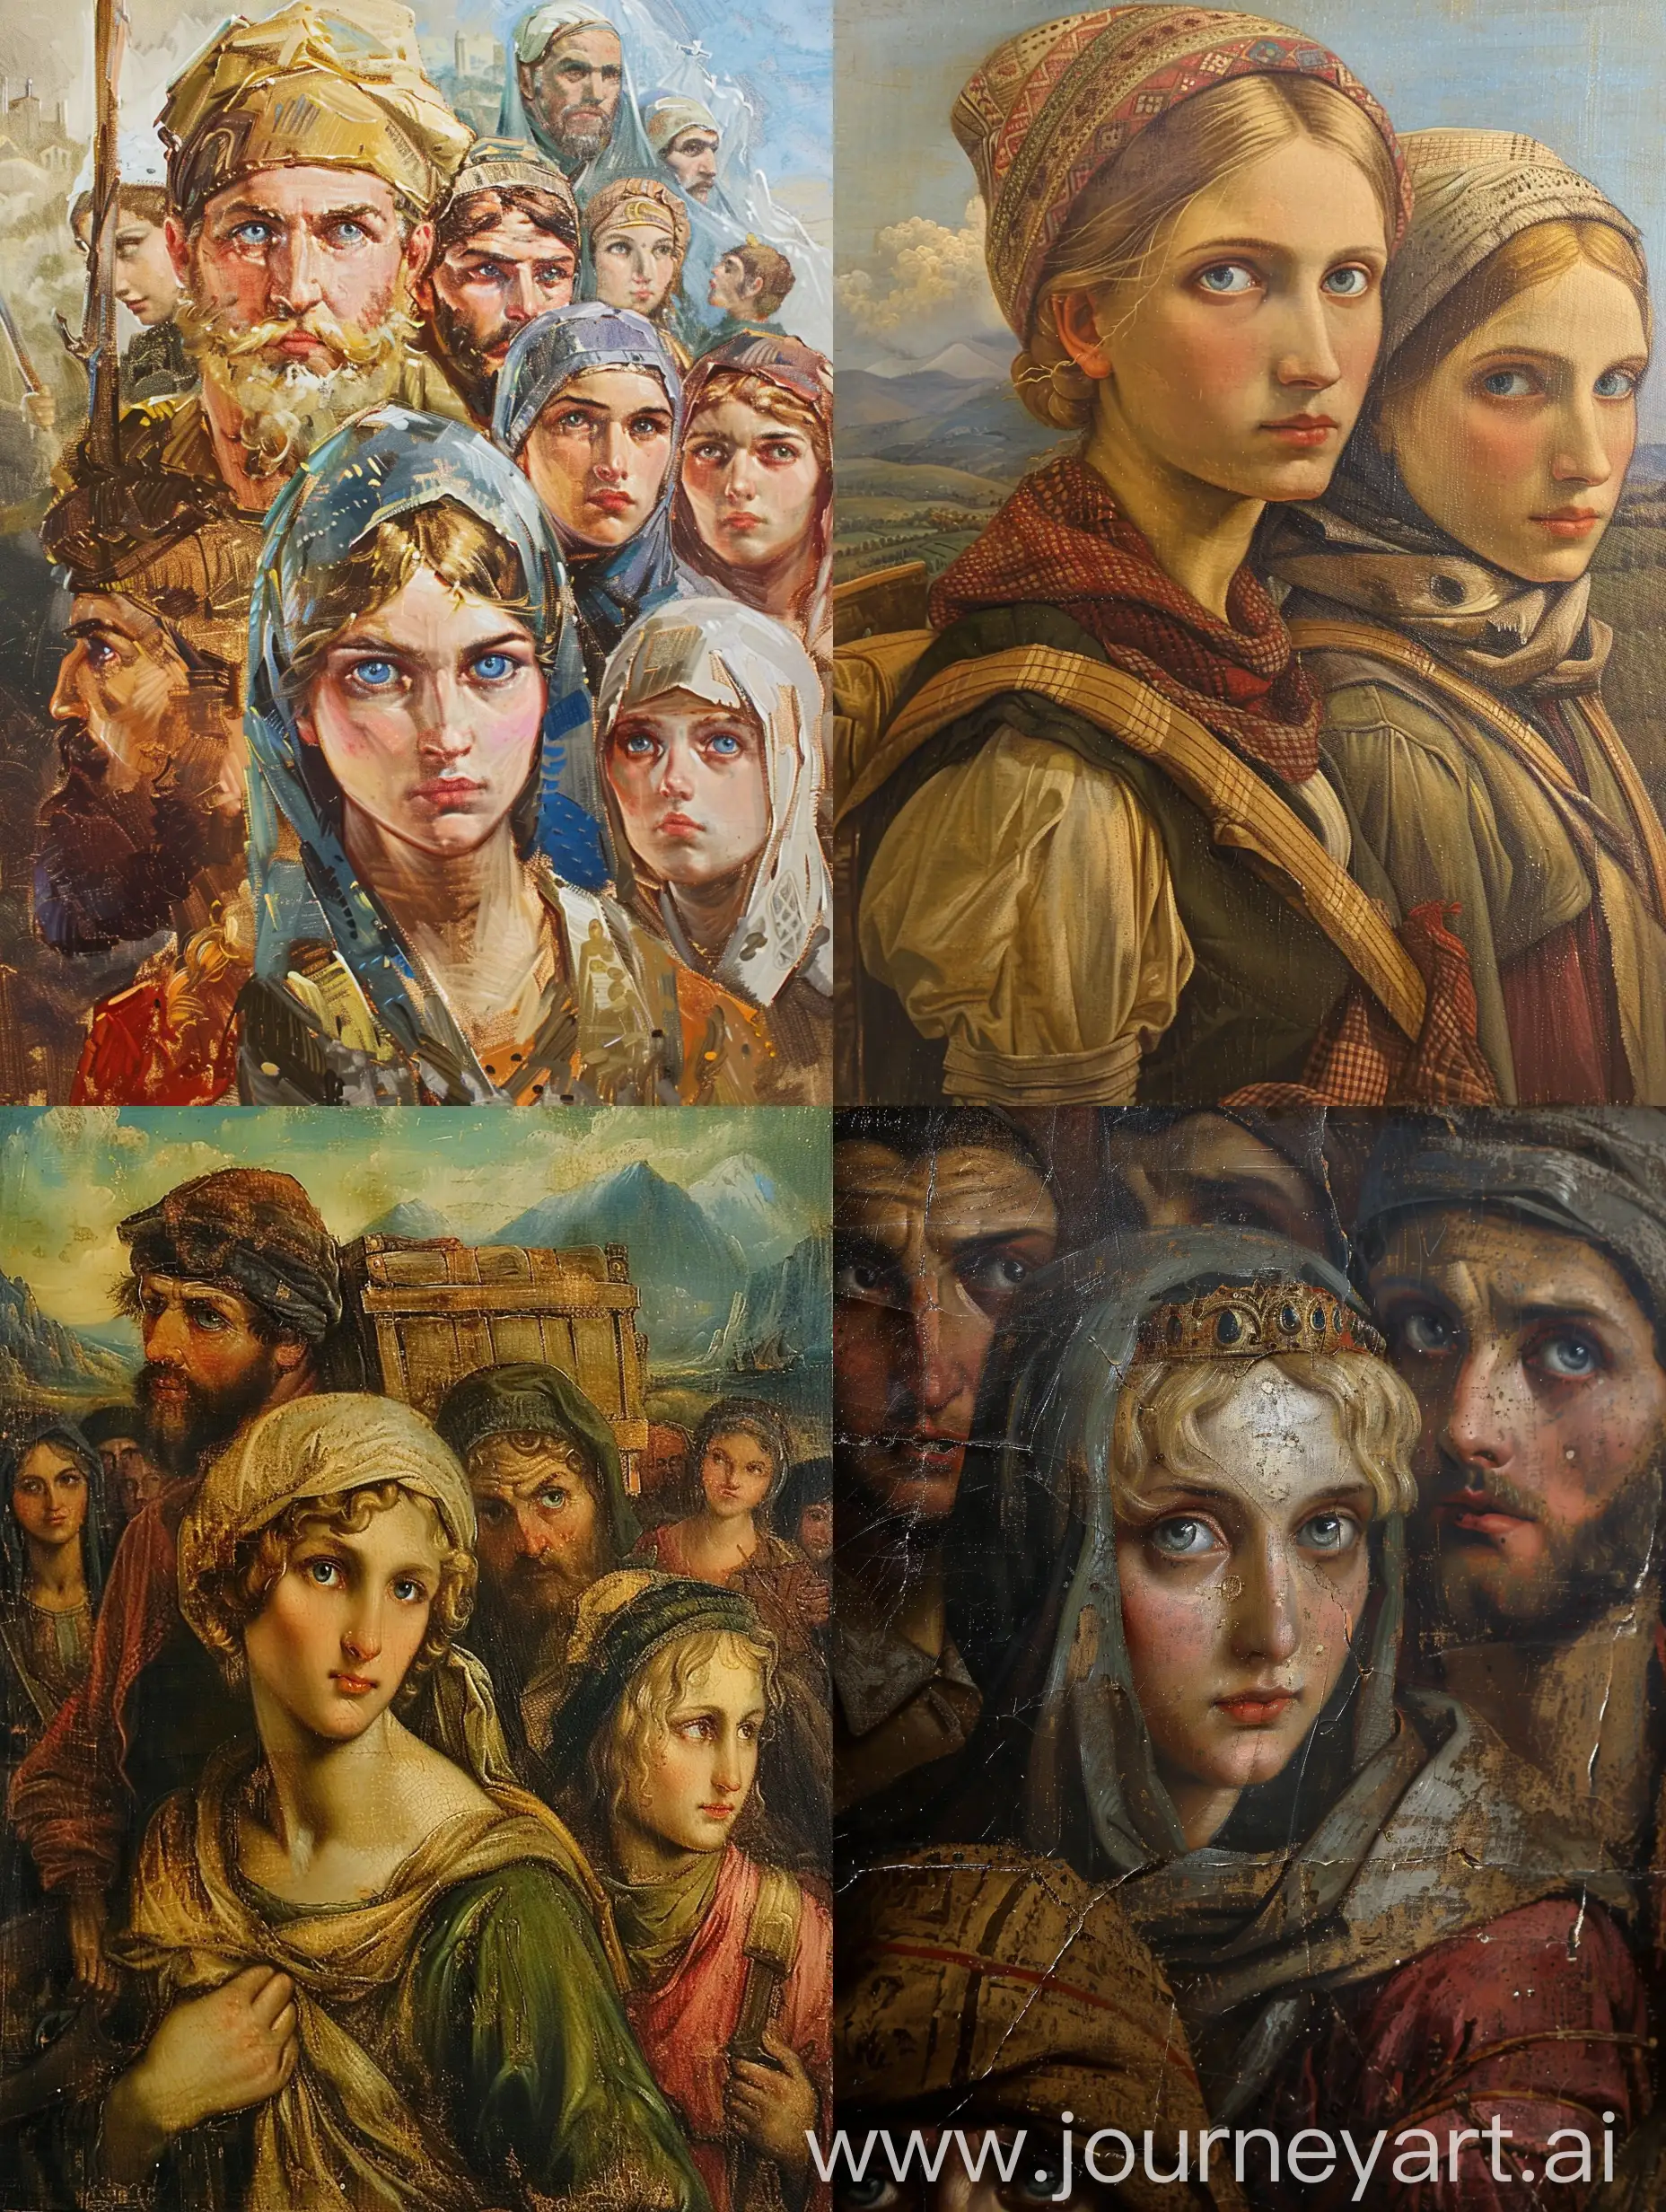 Slavic people migrating to Anatolia. Slavs are blonde and blue eyes while the Anatolians look Mediterranean. Renaissance style, Leonardo Davinci style. Medieval Italian oil painting.